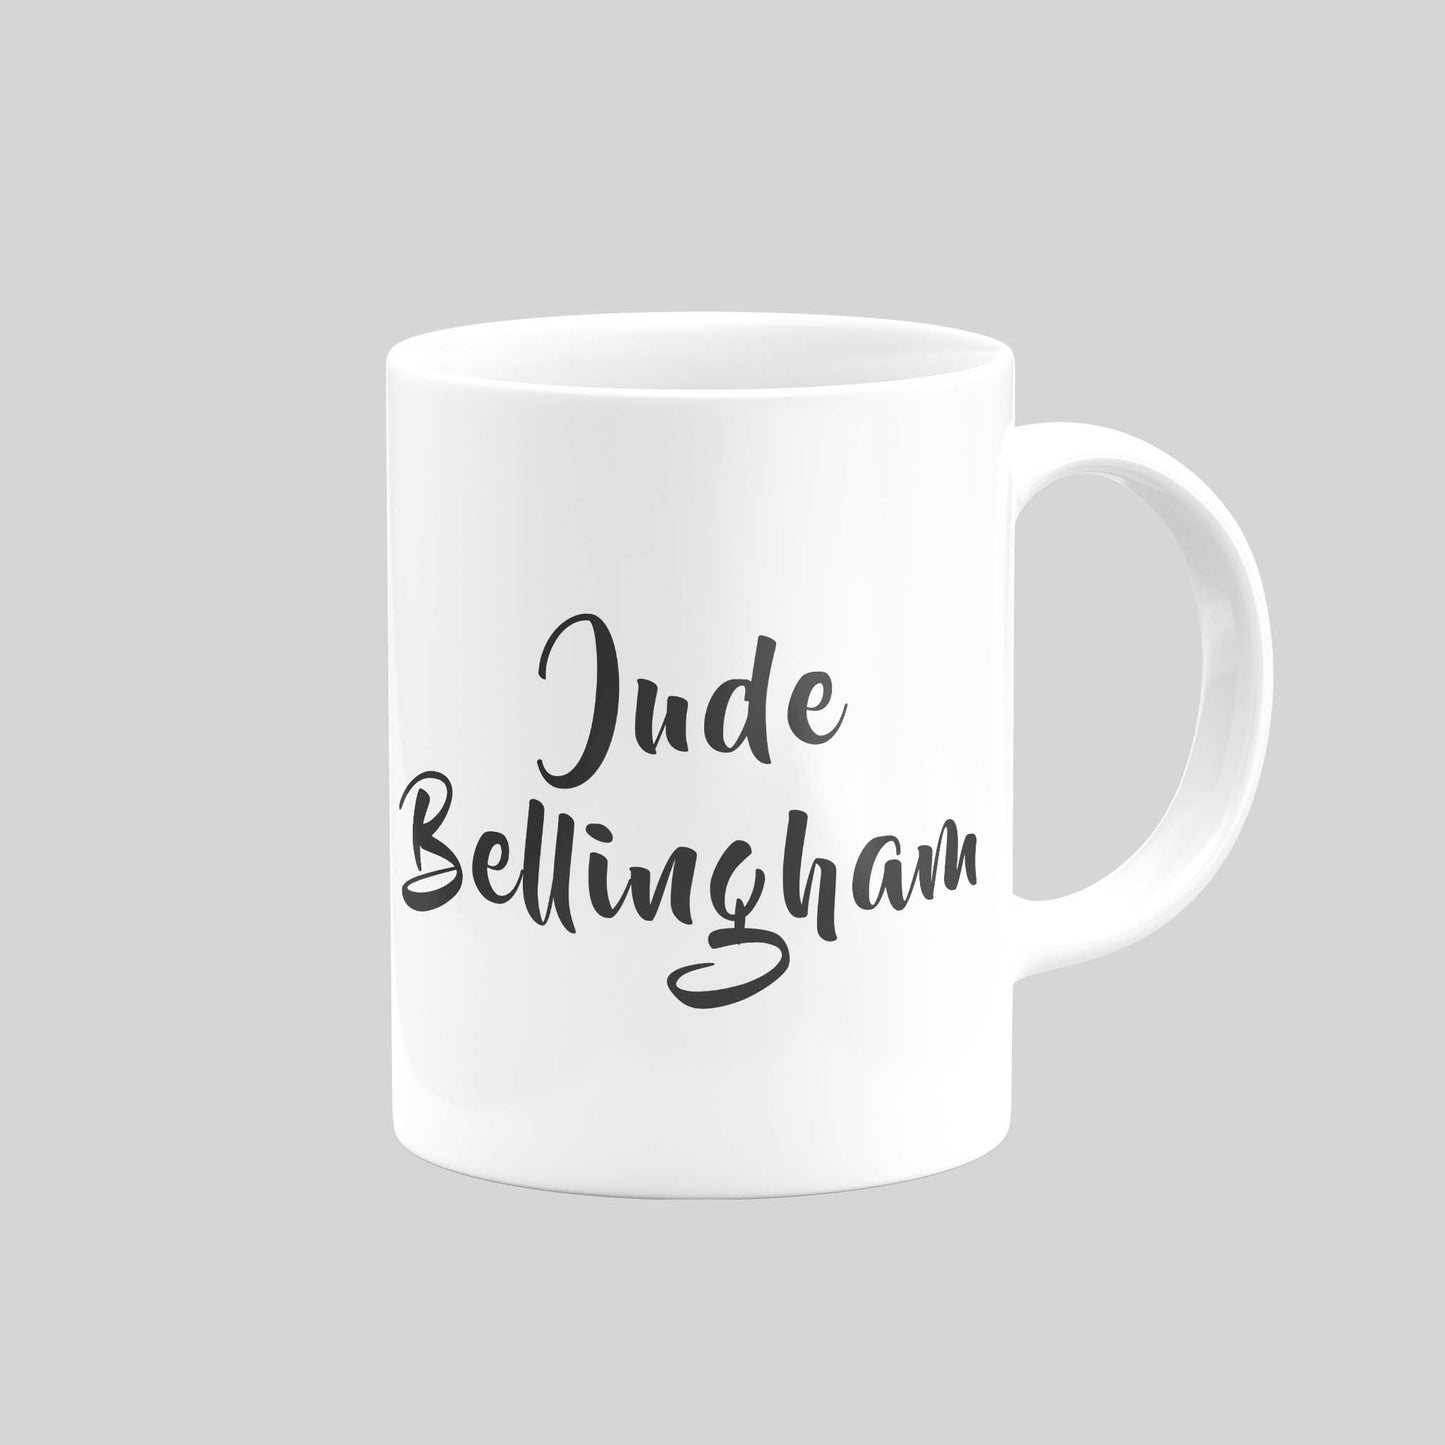 Jude Bellingham Real Madrid Mug A3 Print - DanDesignsGB